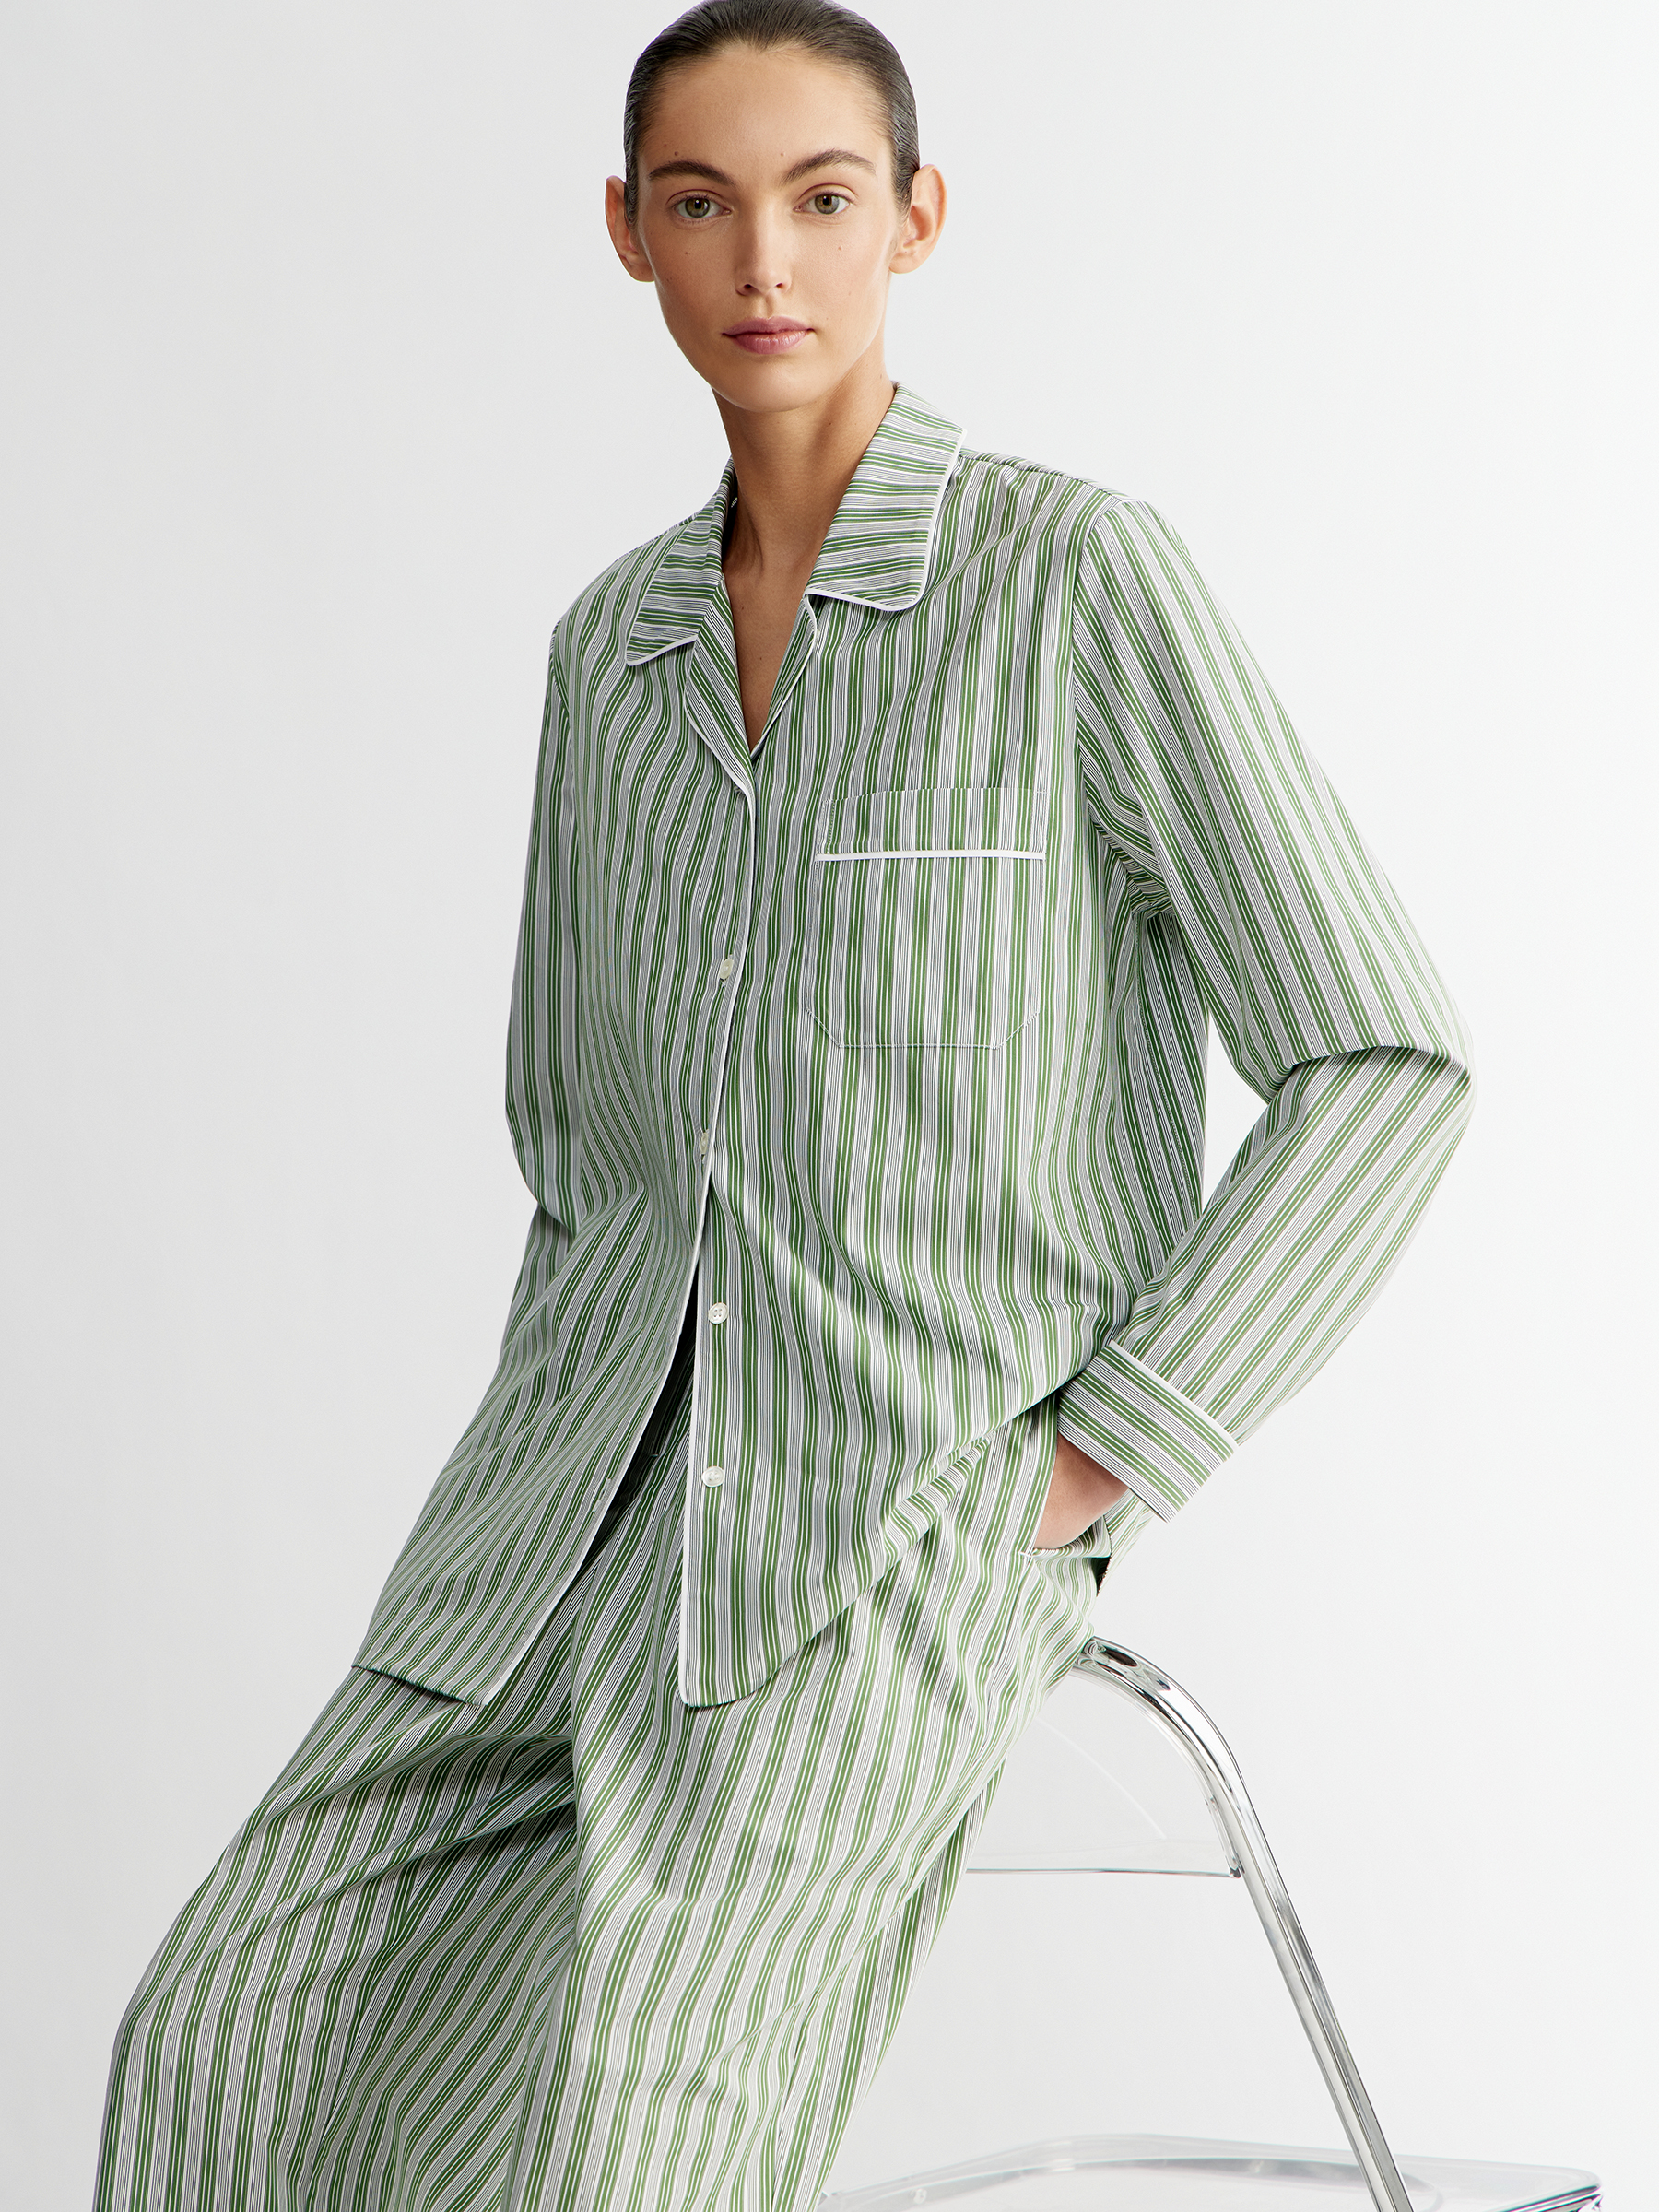 Пижама из хлопка 12 STOREEZ 12⠀storeez сарафан из хлопка